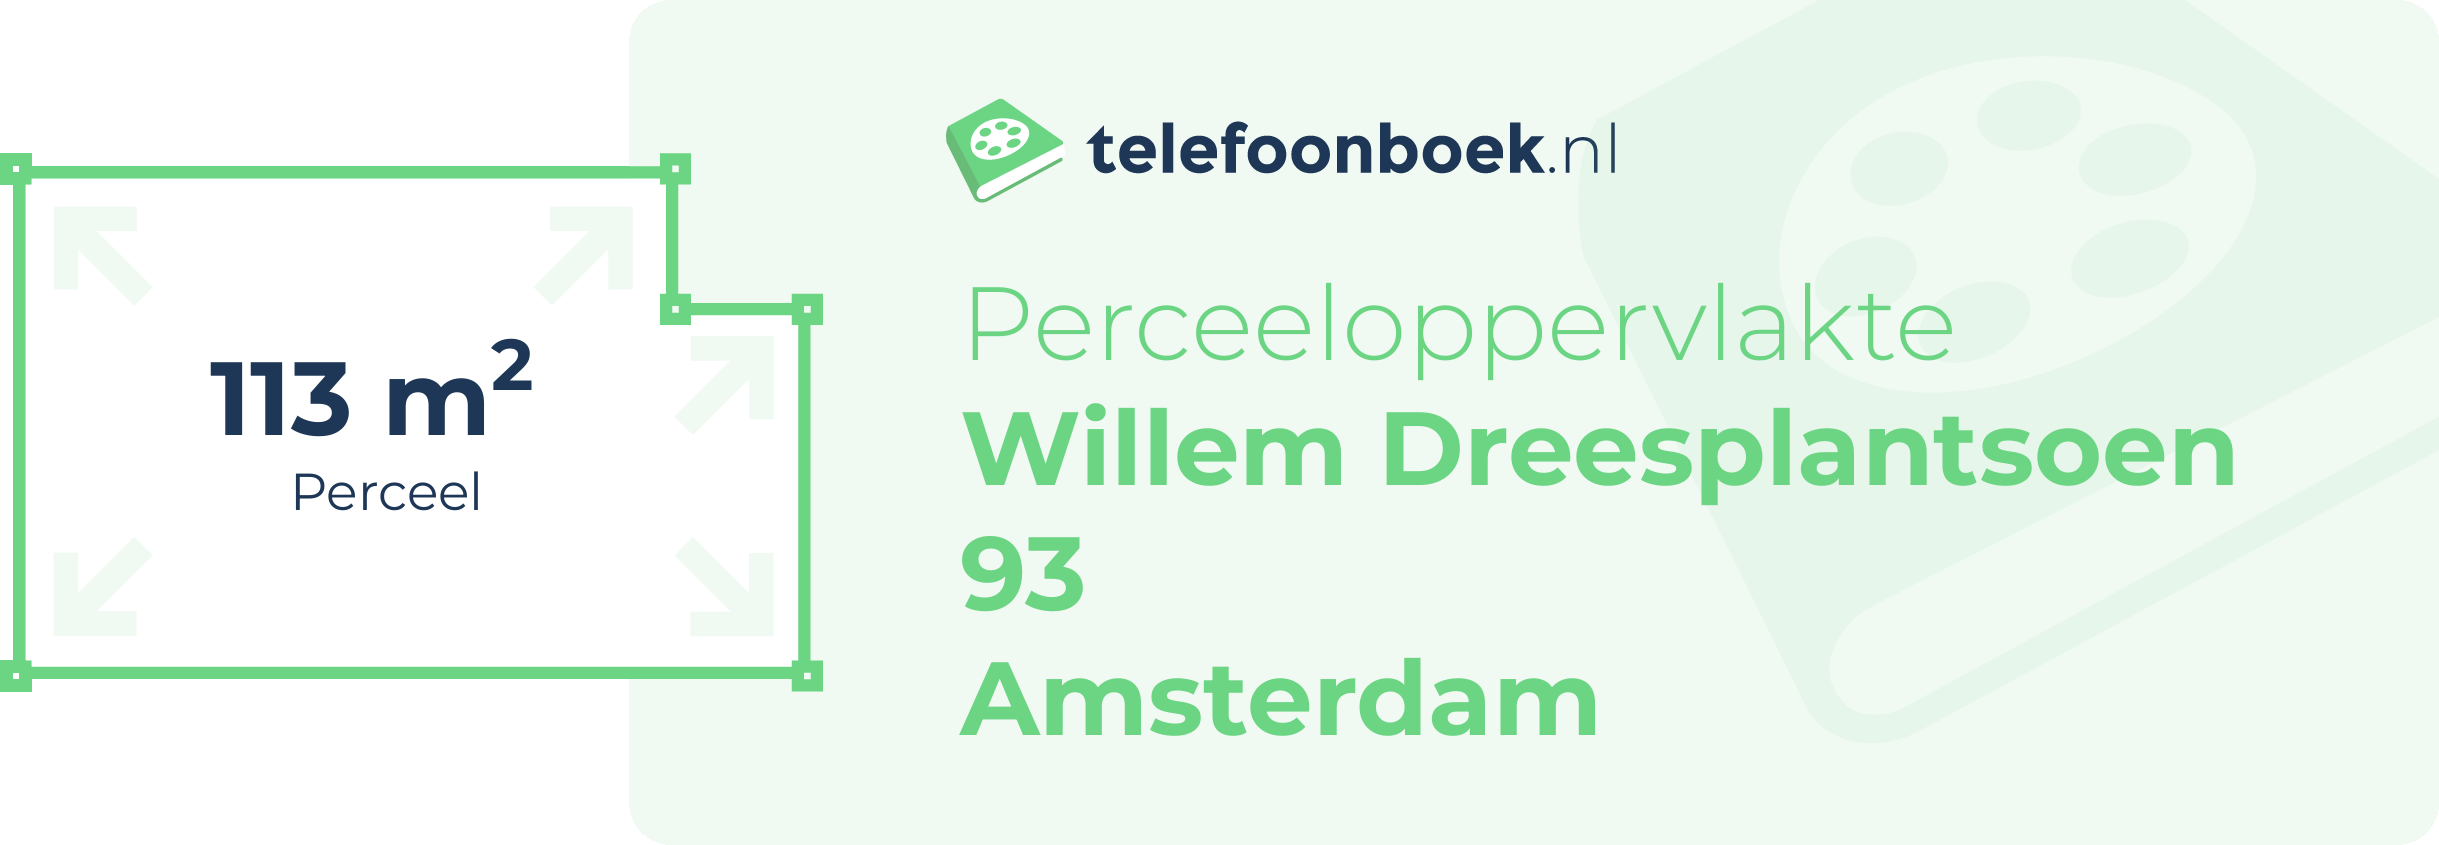 Perceeloppervlakte Willem Dreesplantsoen 93 Amsterdam